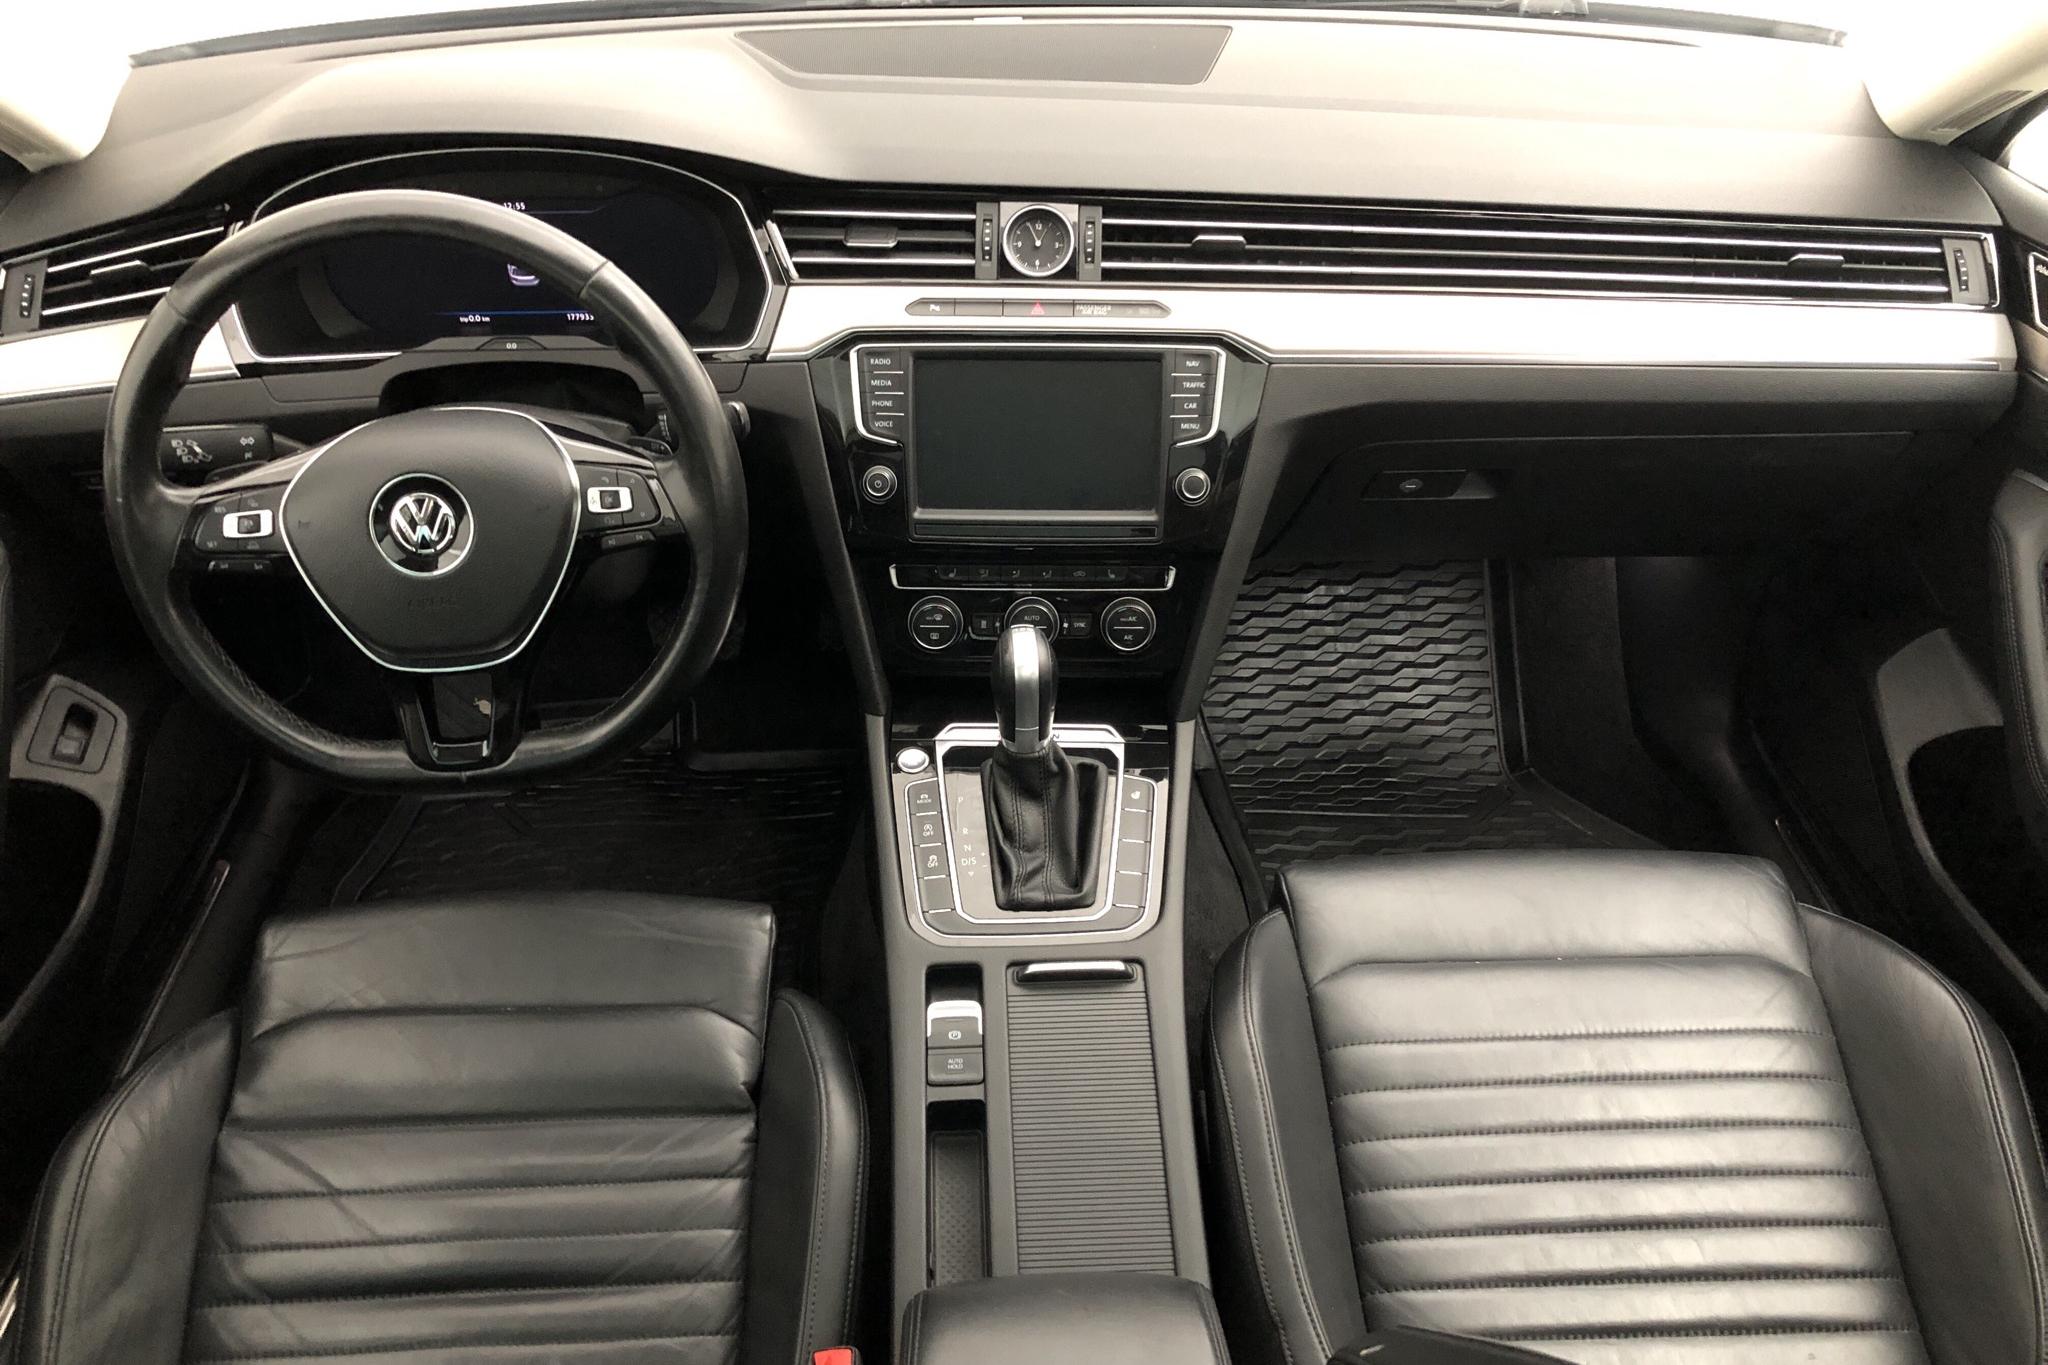 VW Passat 2.0 TDI BiTurbo Sportscombi 4MOTION (240hk) - 177 940 km - Automatic - silver - 2017